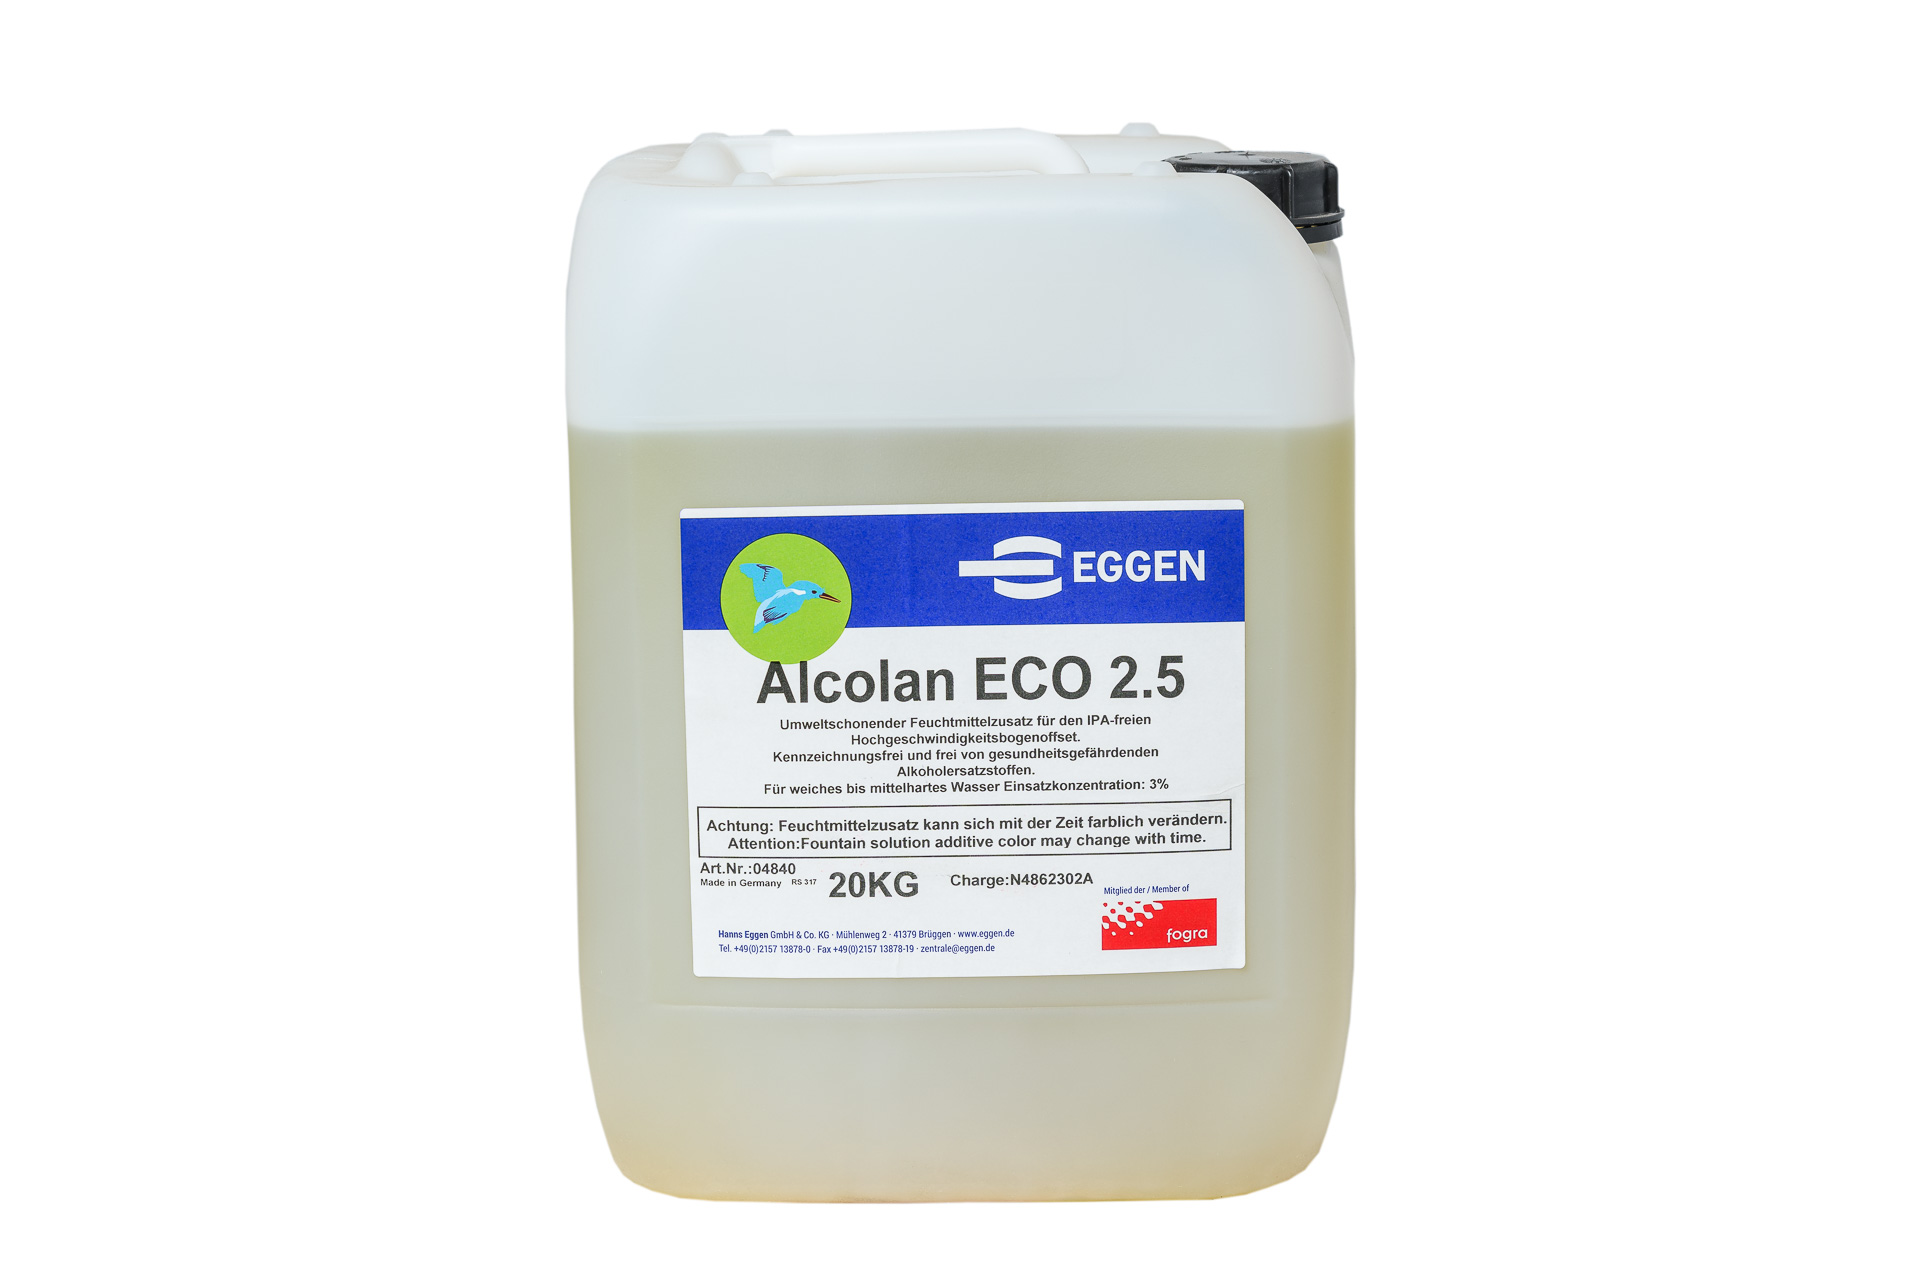 Alcolan ECO 2.5